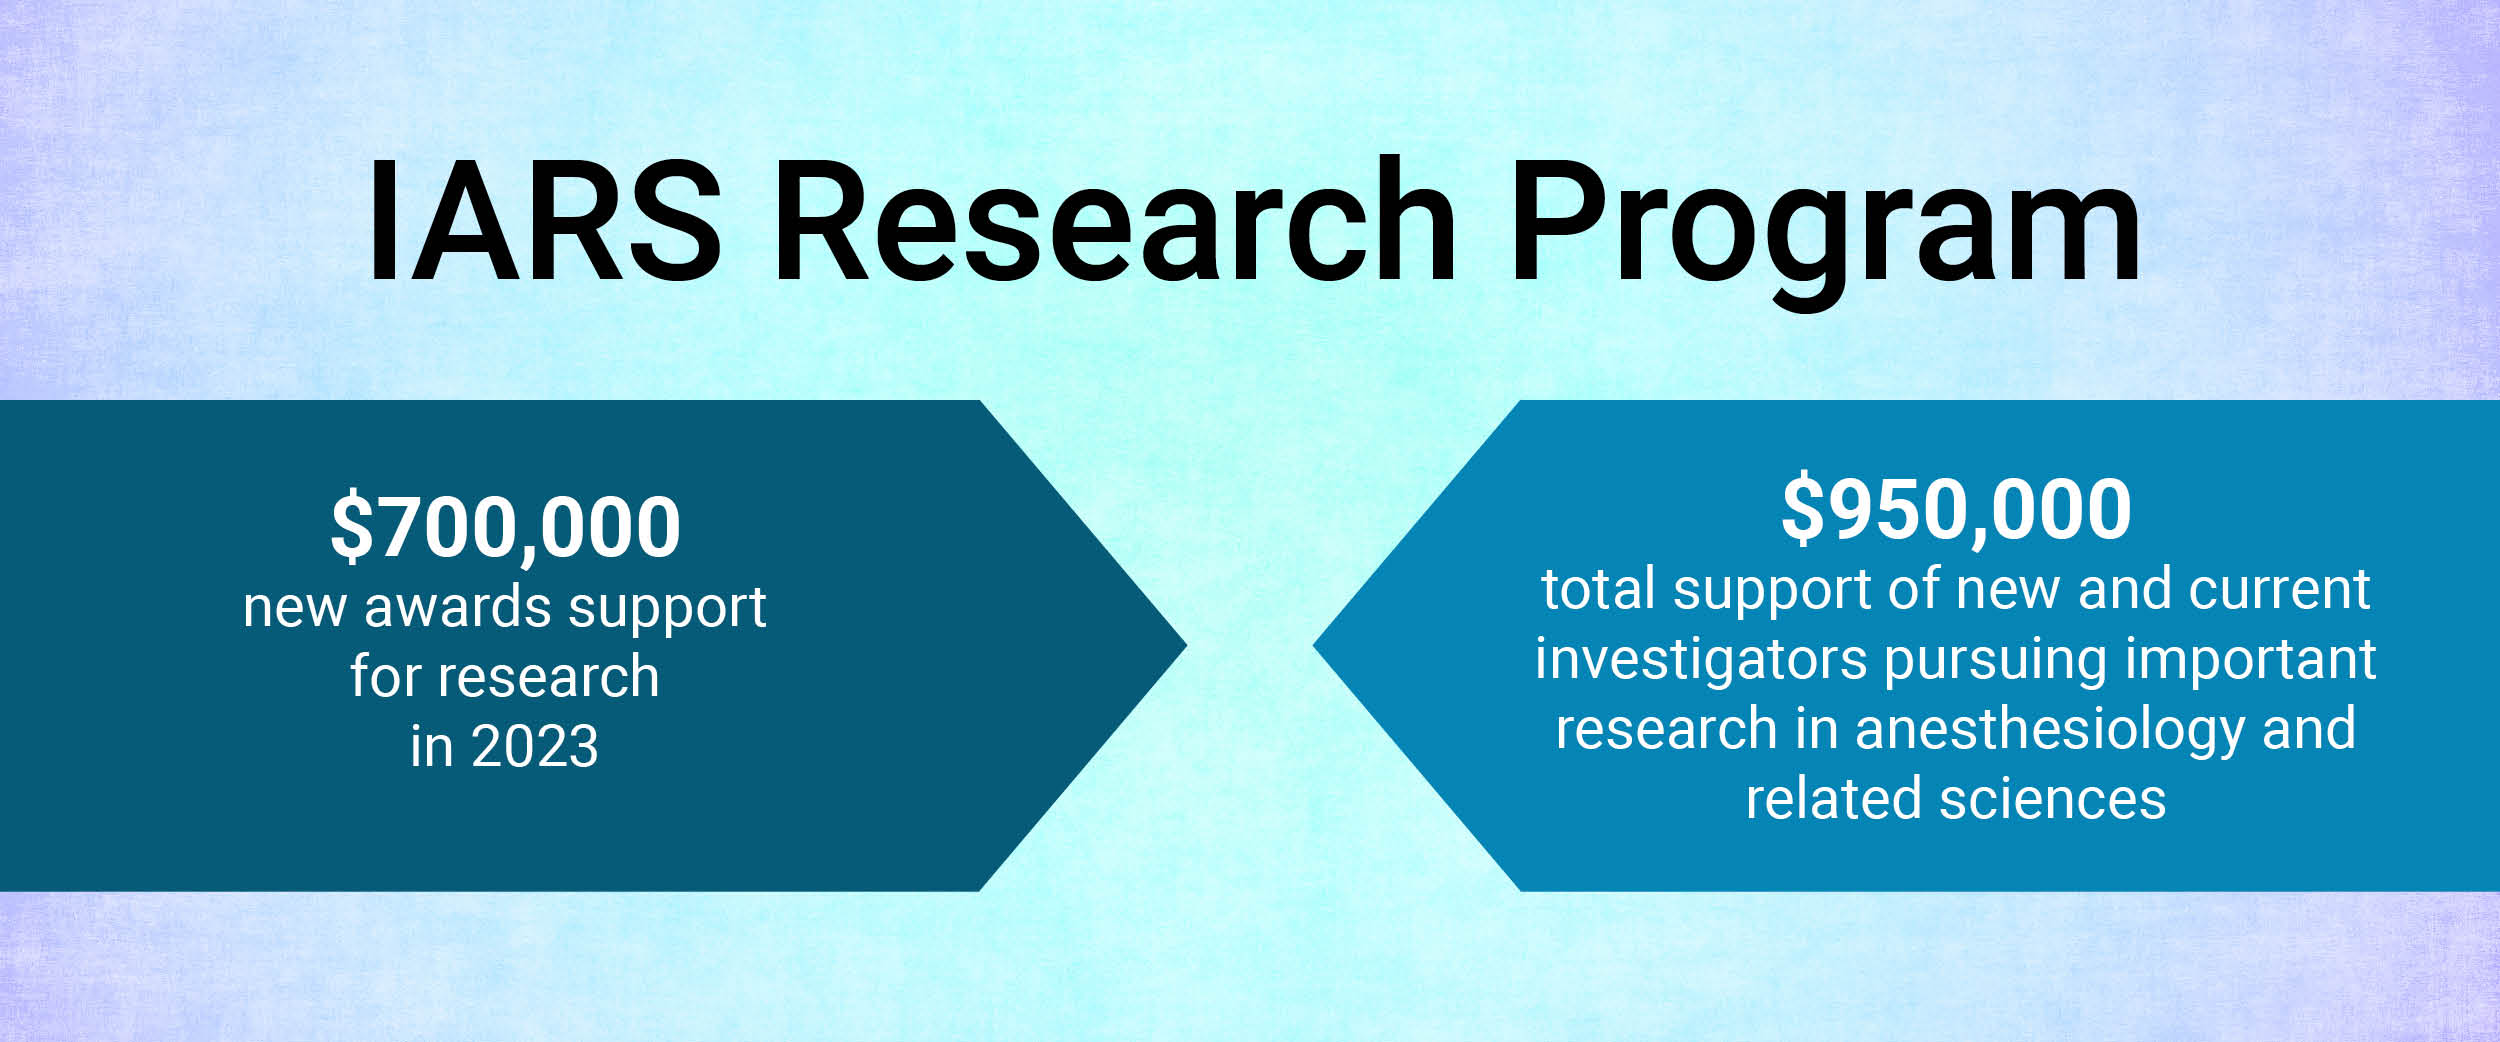 IARS Research Program